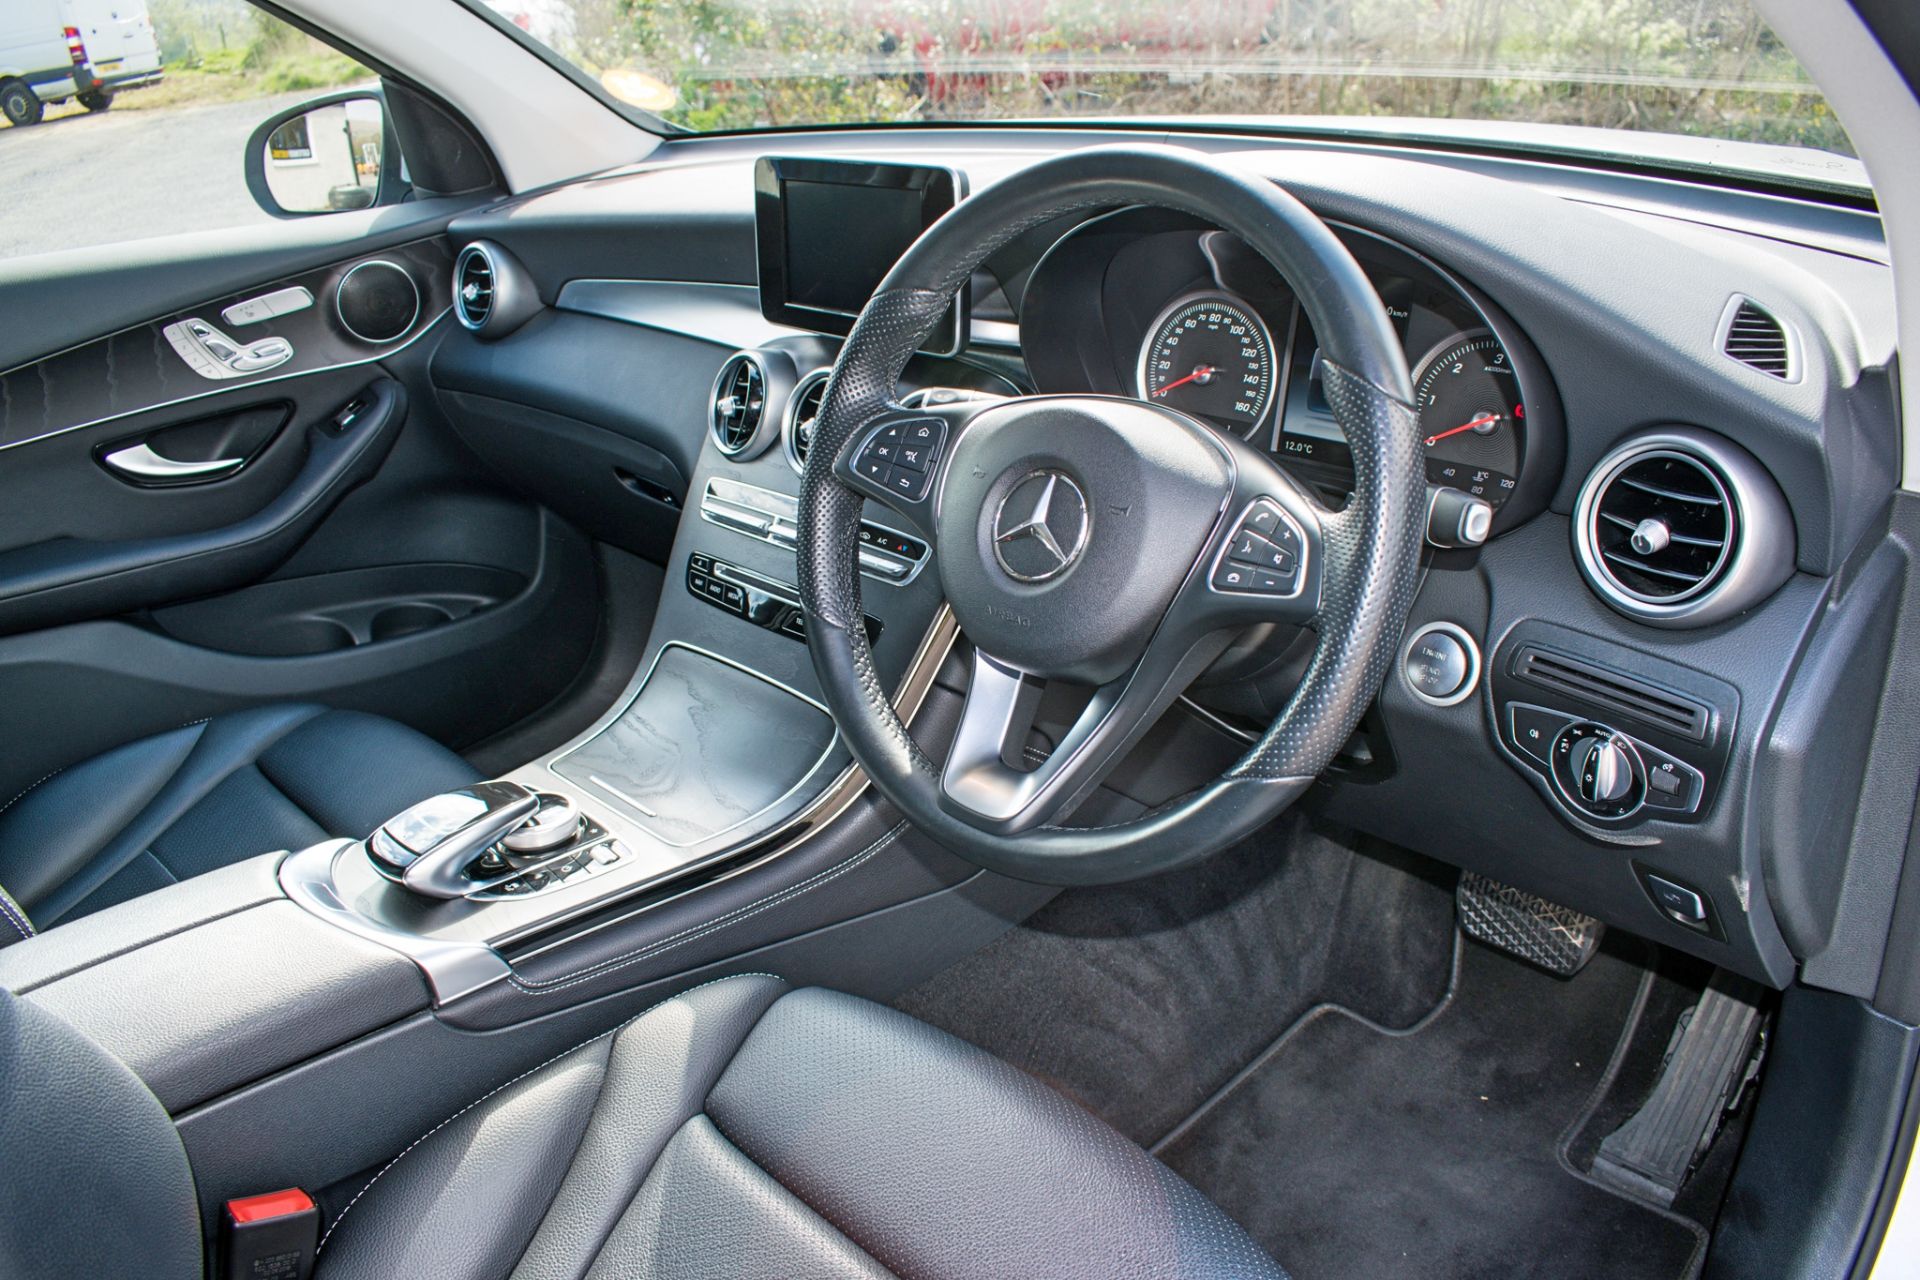 Mercedes Benz GLC220d Sport Premium 5 door estate SUV Registration Number: MK66 NBO Date of - Image 7 of 13